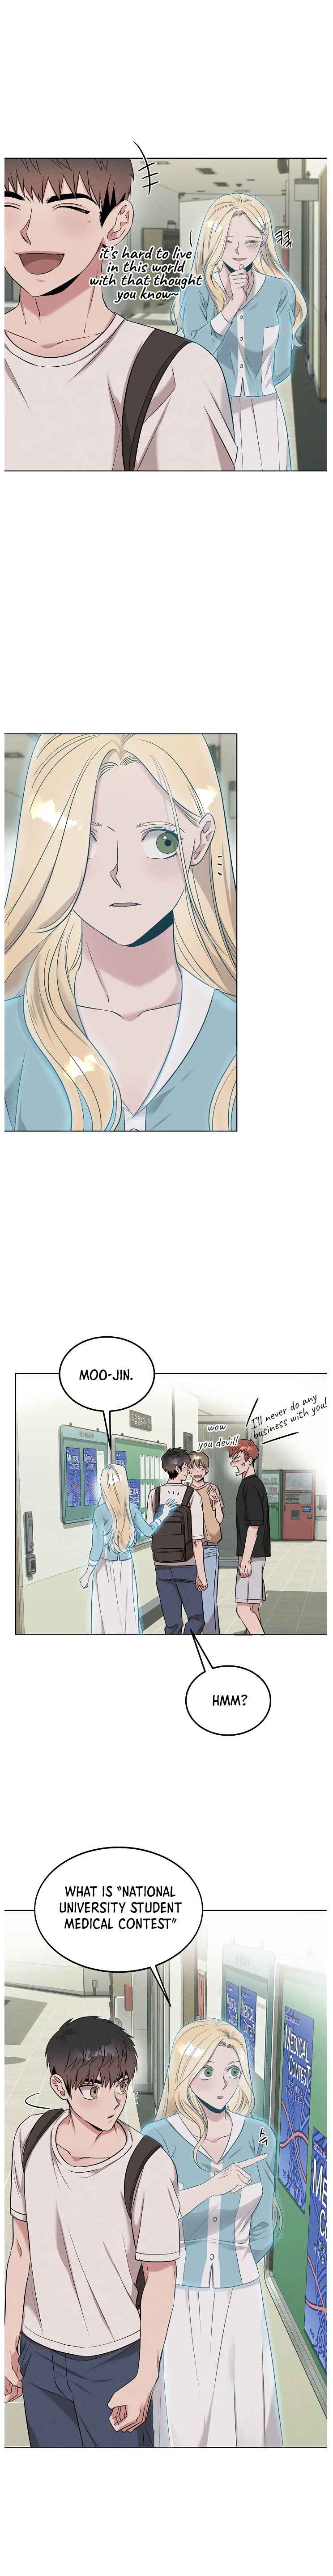 Genius Doctor Lee Moo-jin Chapter 53-eng-li - Page 4